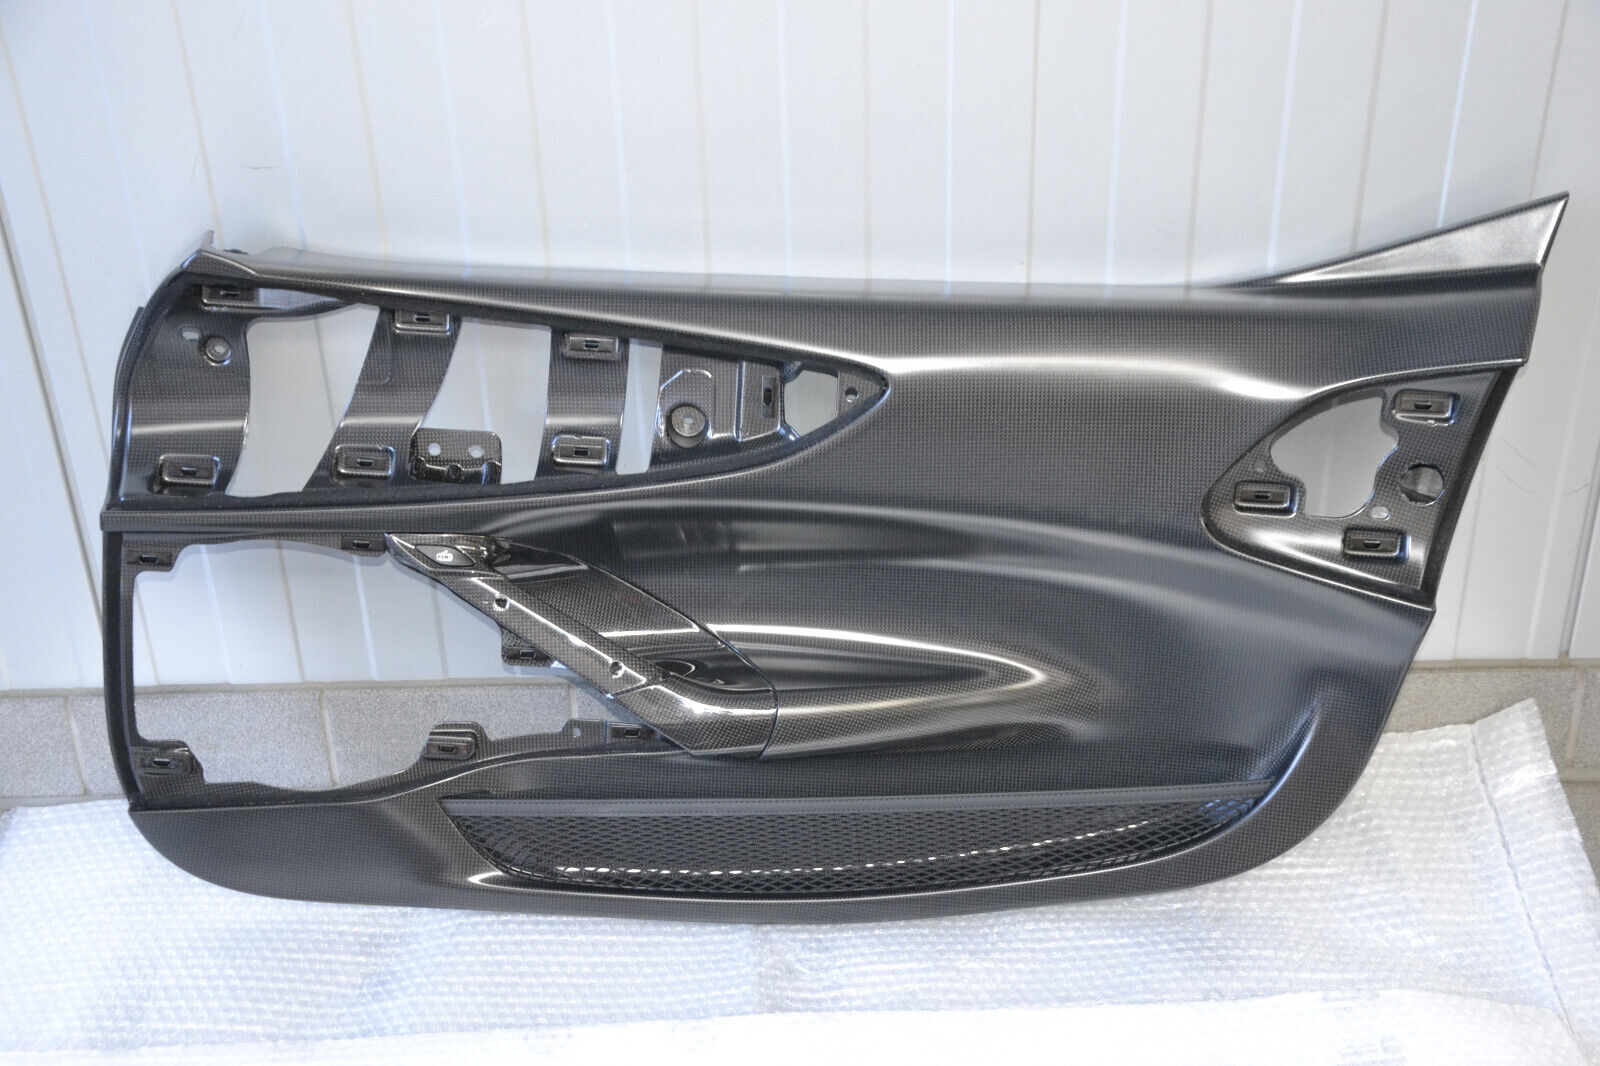 Ferrari SF90 Stradale Door Trim cover Carbon fiber OEM, Part number: 876212 876167